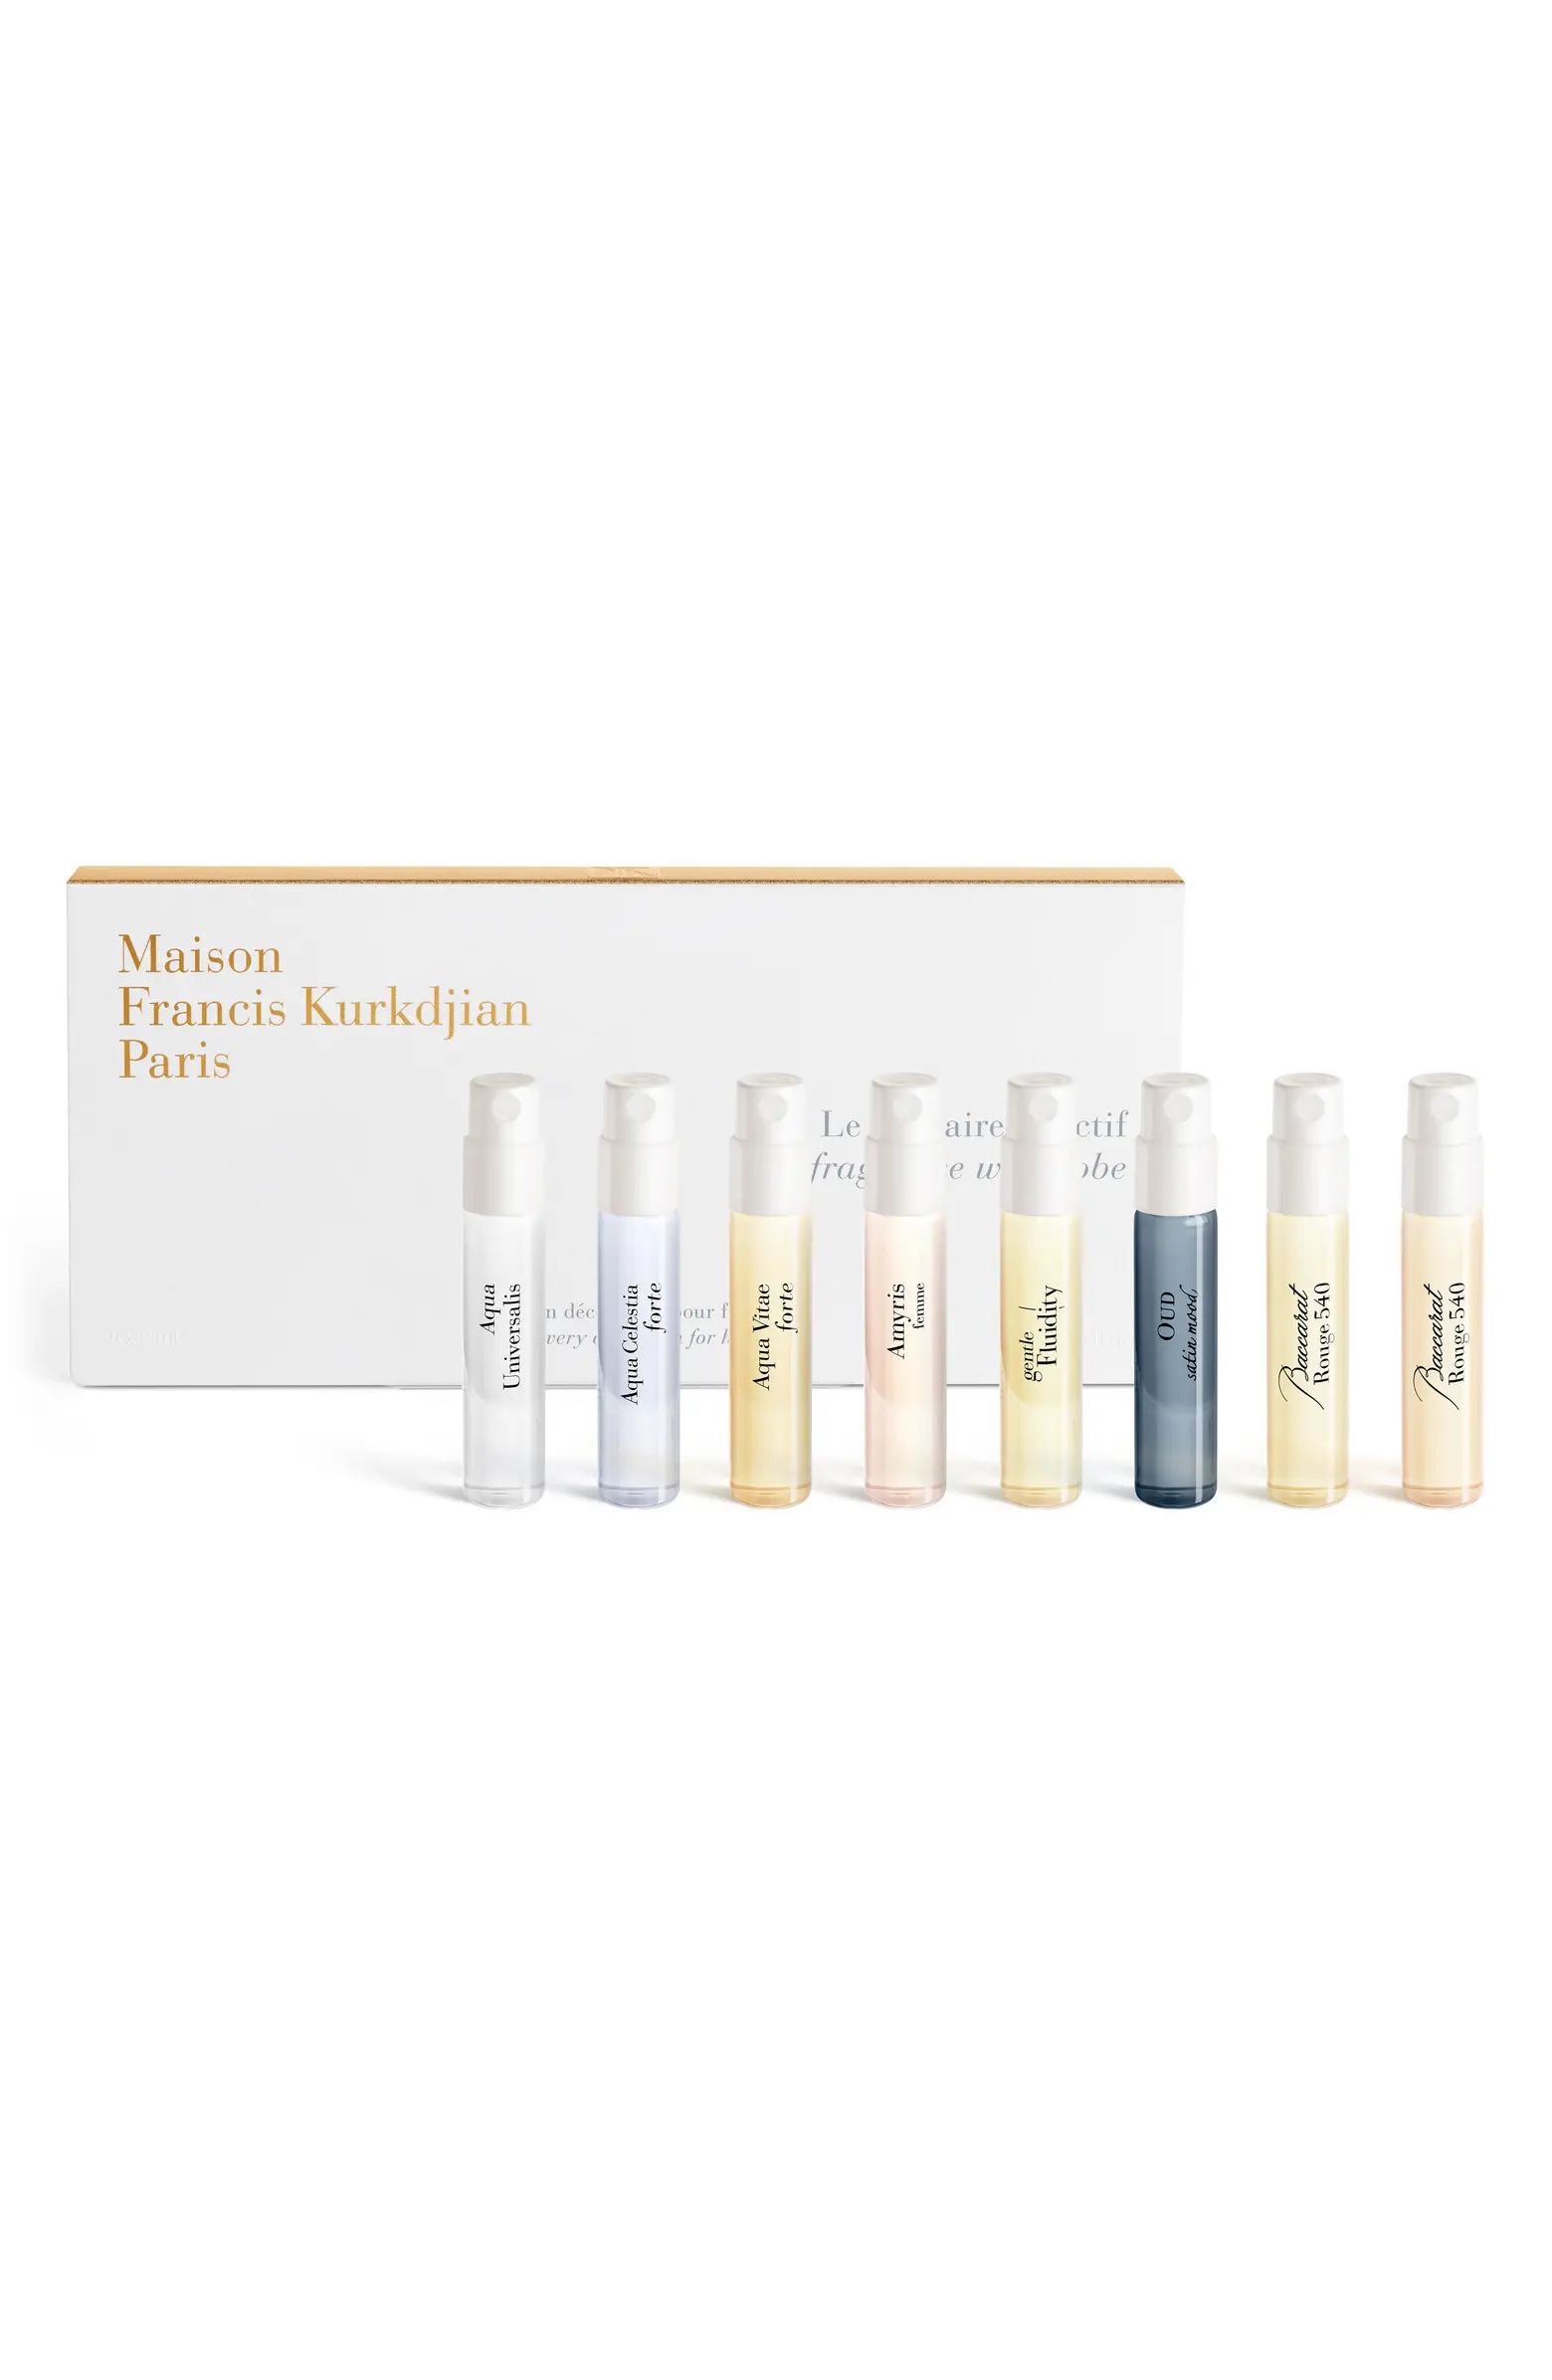 Maison Francis Kurkdjian Paris Travel Size Fragrance Wardrobe for Her Set | Nordstrom | Nordstrom